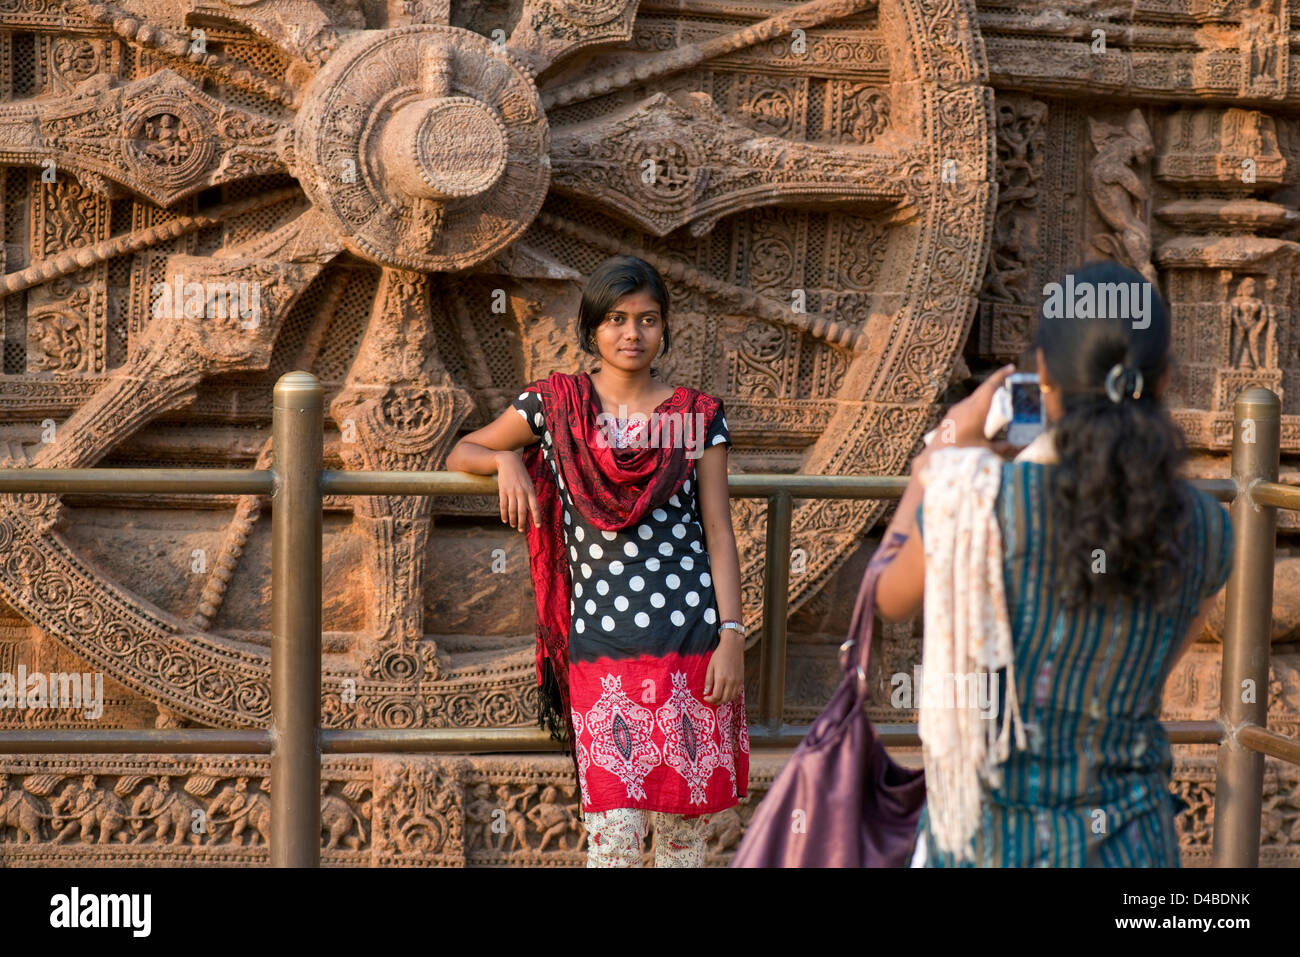 A woman takes a photograph of her friend at the Konark Sun Temple near Puri, Odisha state, India Stock Photo